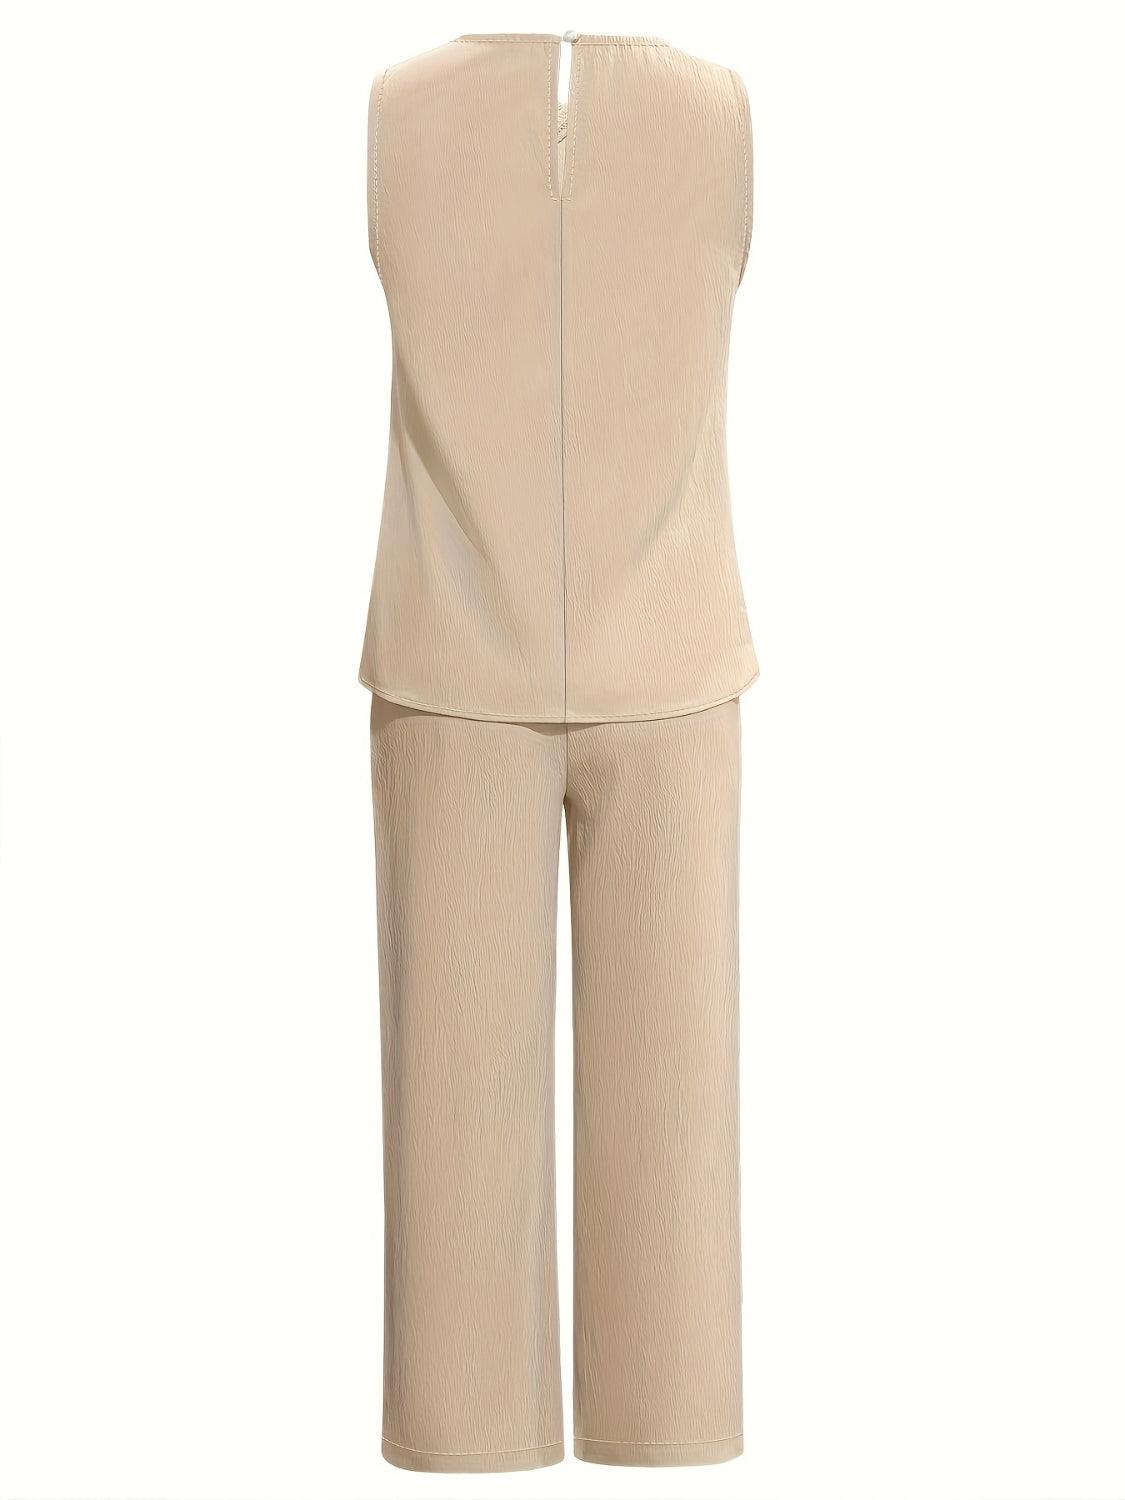 Bona Fide Fashion - Crisscross Sleeveless Top and Wide Leg Pants Set - Women Fashion - Bona Fide Fashion